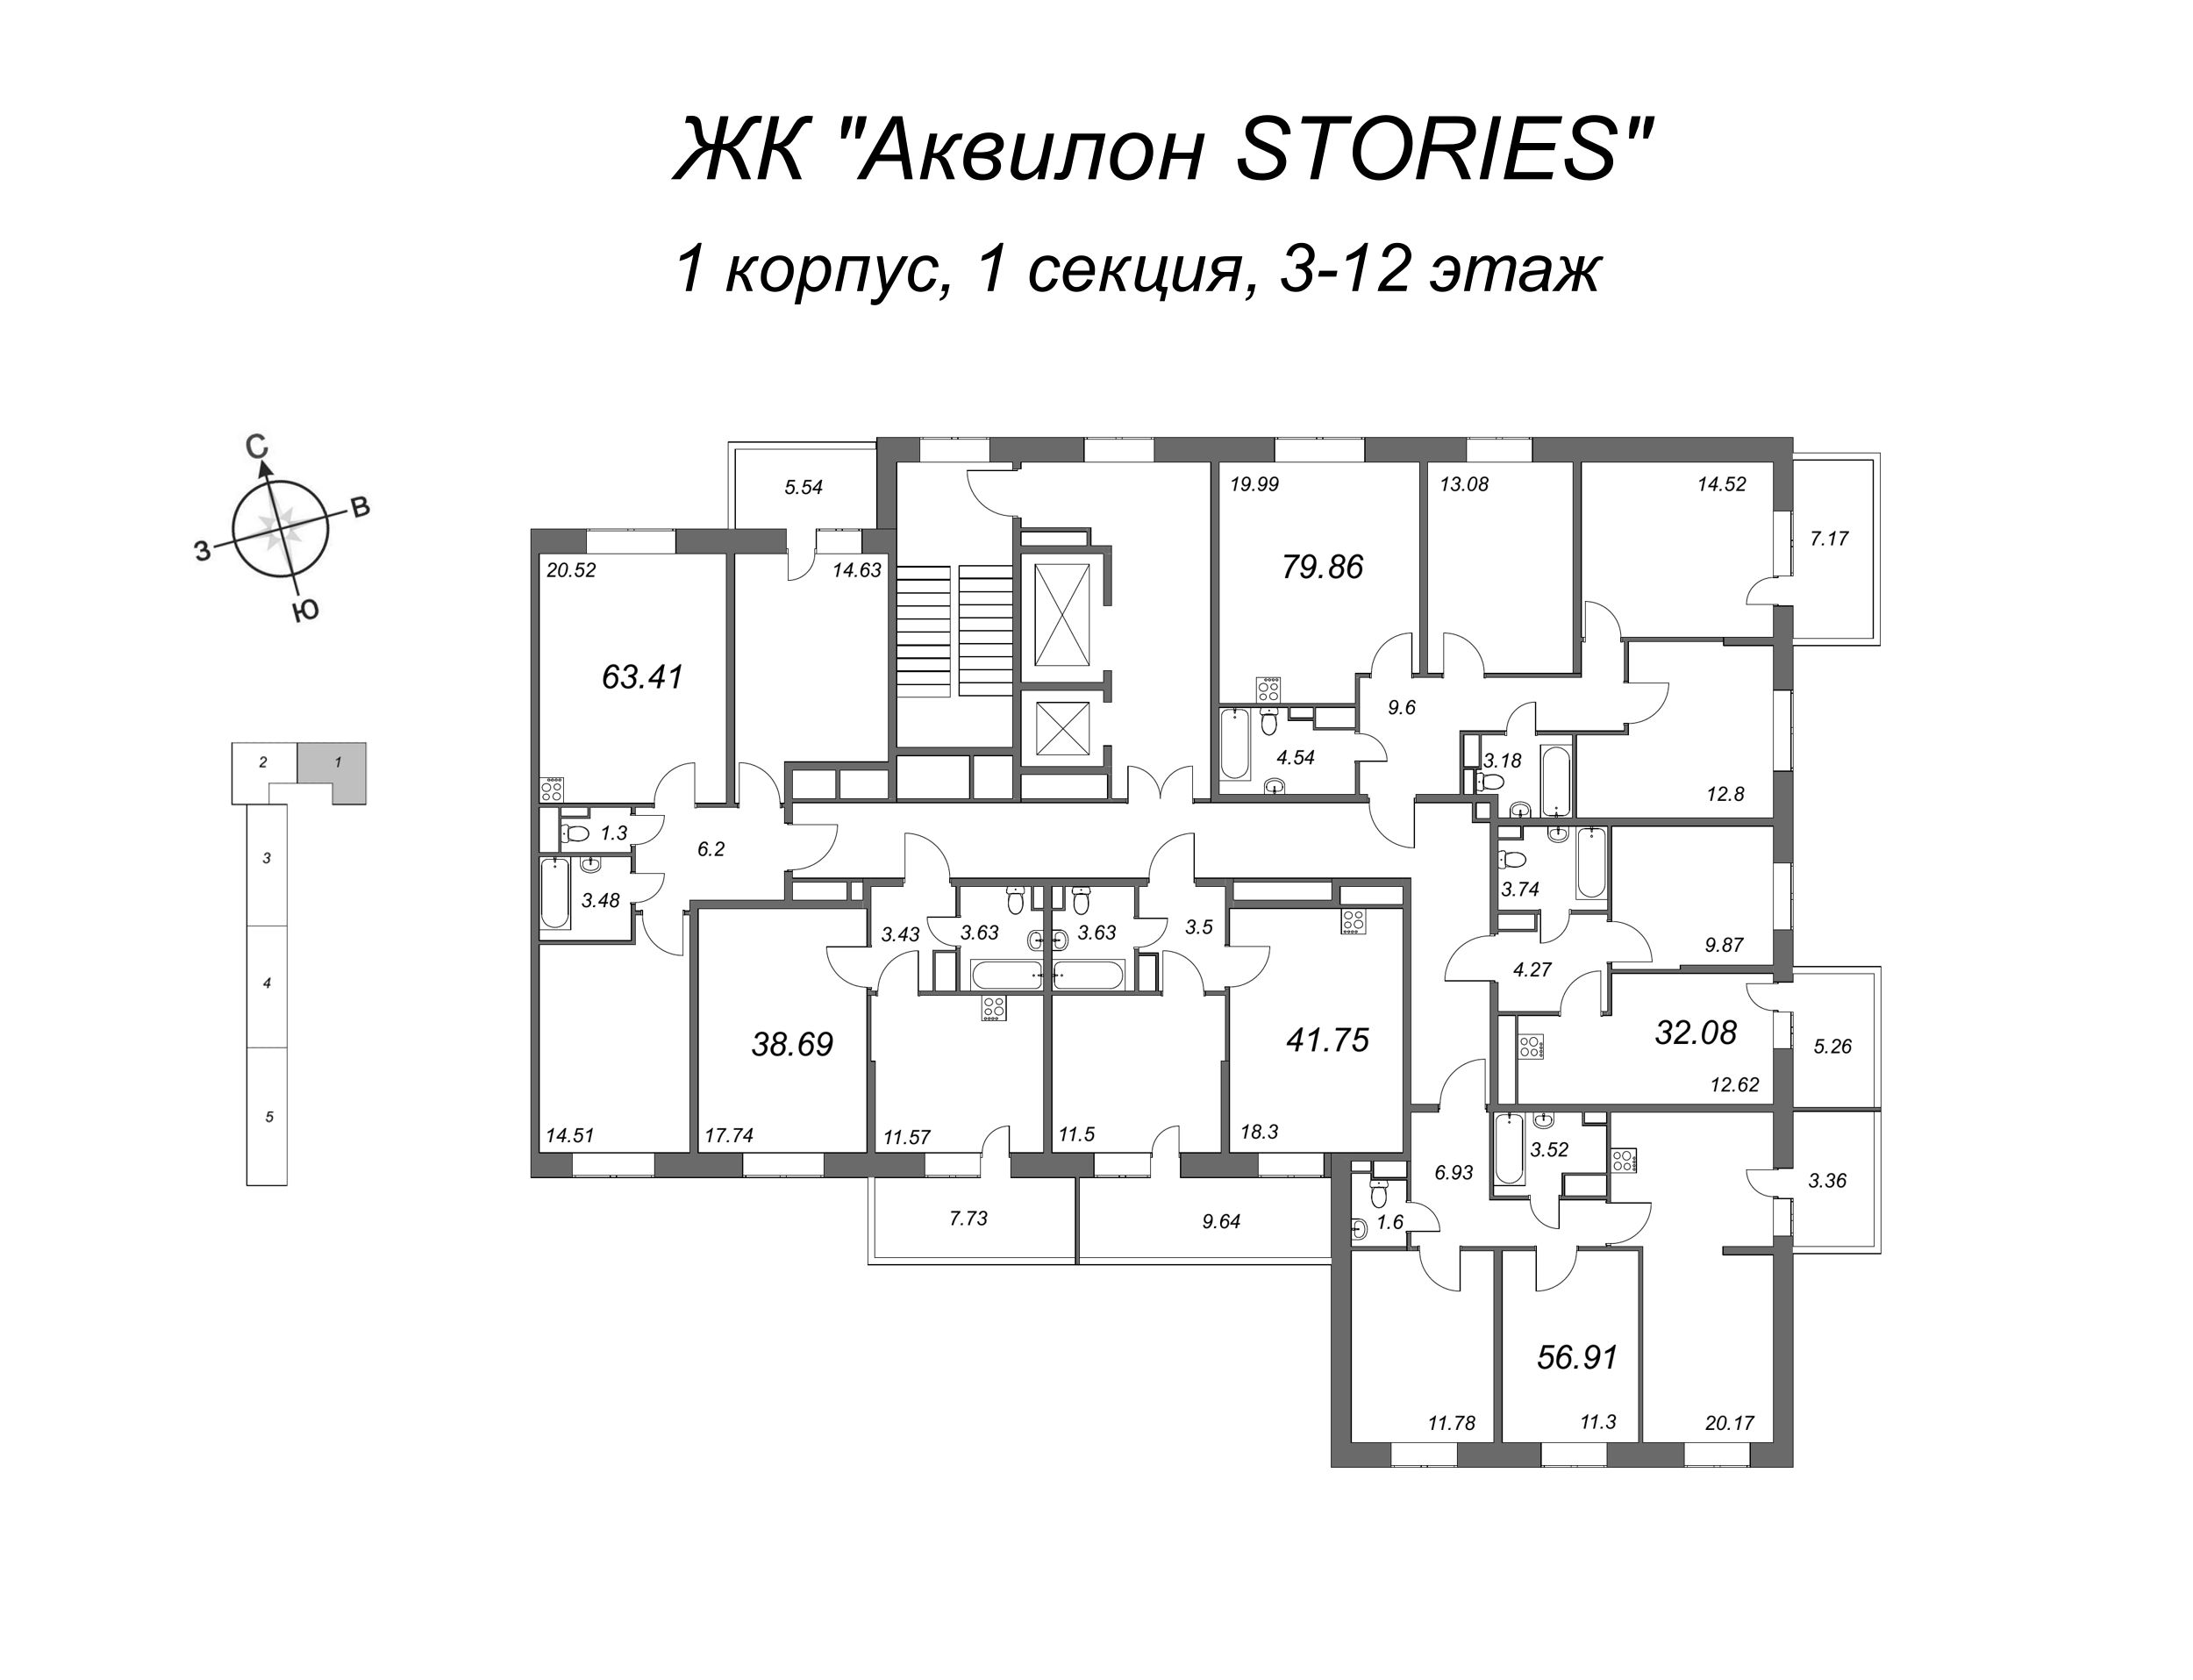 1-комнатная квартира, 38.7 м² в ЖК "Аквилон Stories" - планировка этажа